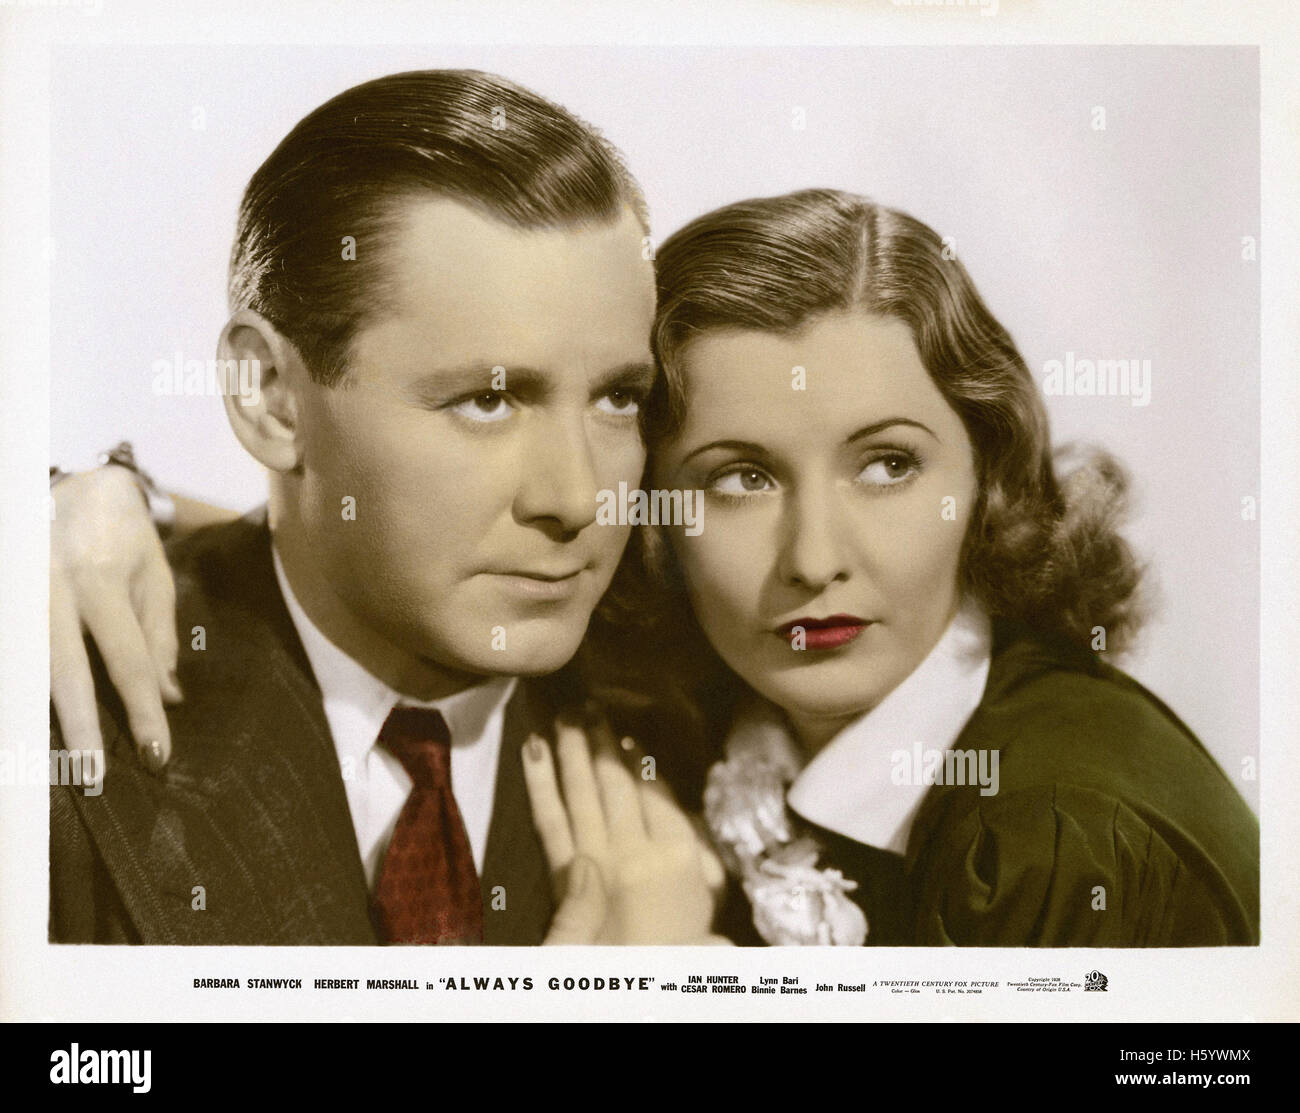 Always Goodbye (1938) - Movie Poster Stock Photo